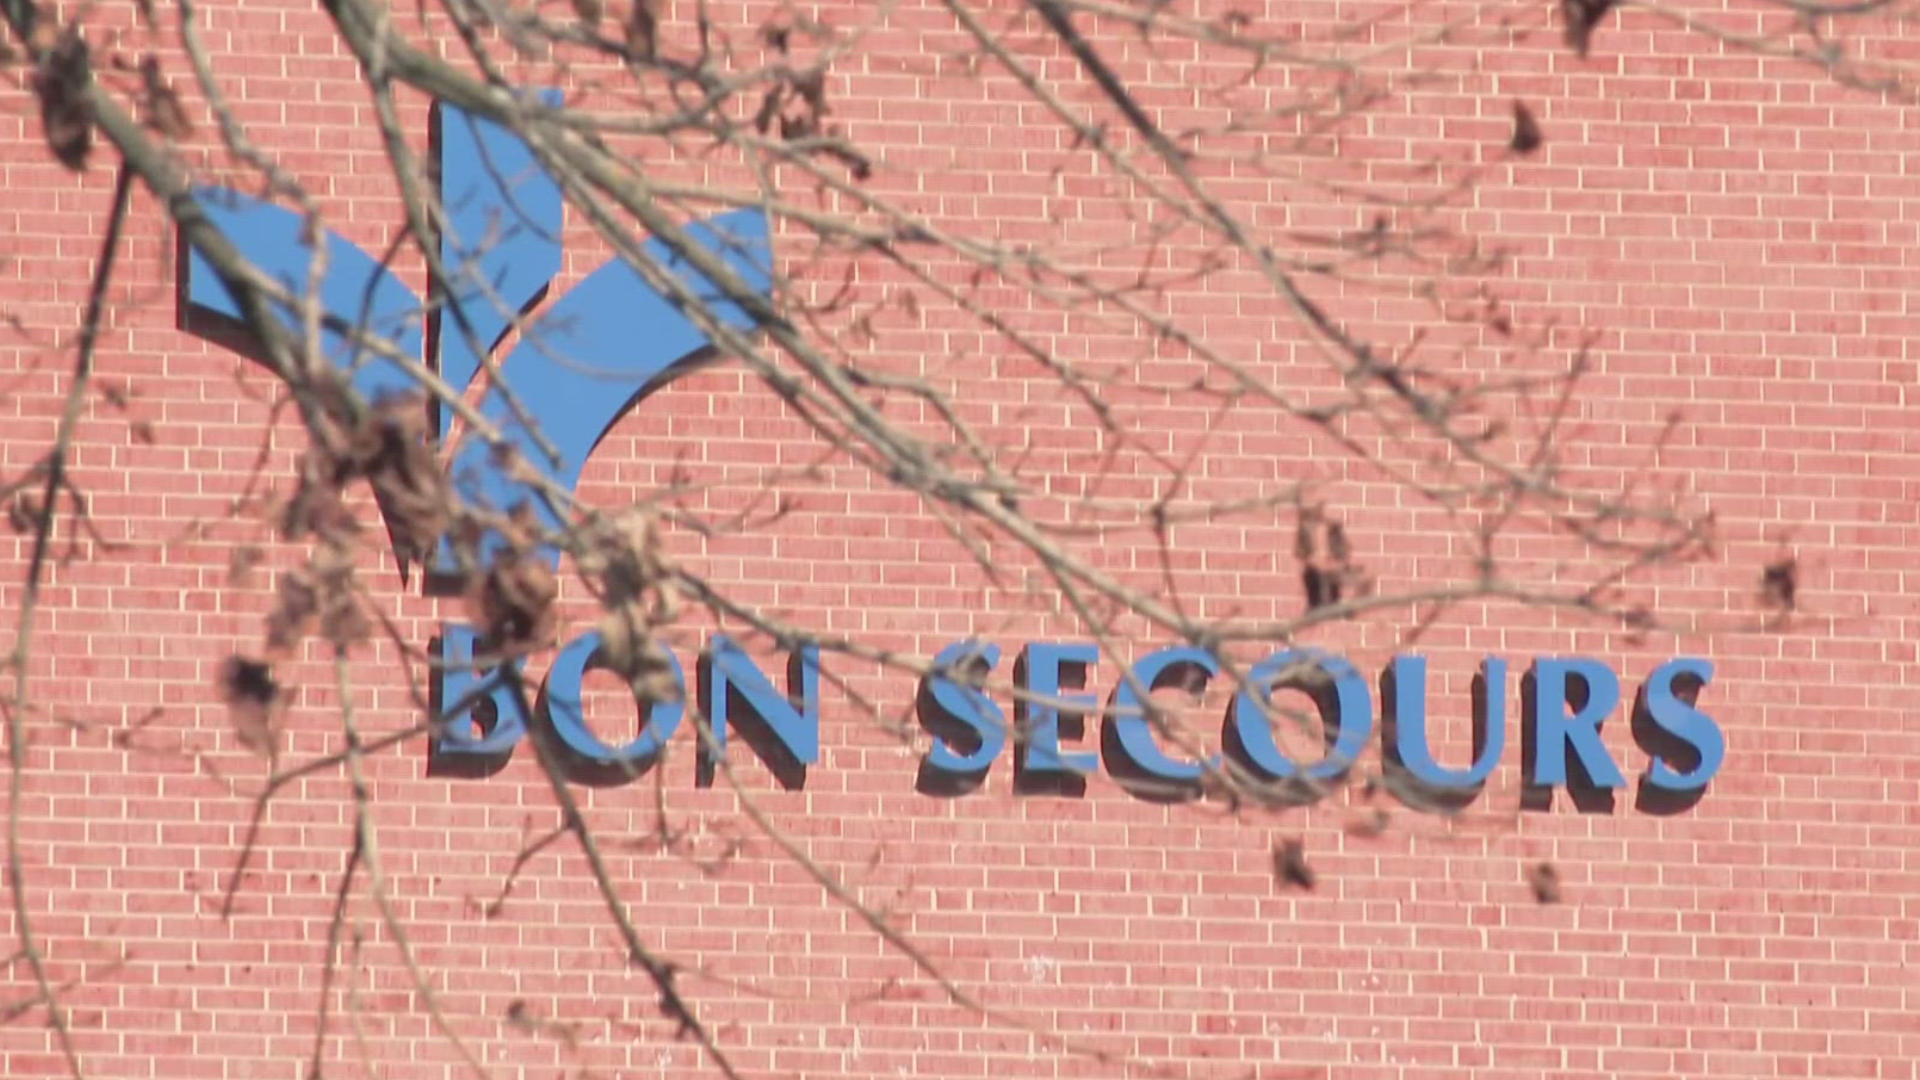 Bon Secours dropped Anthem Blue Cross Blue Shield after failing to reach an agreement on reimbursement rates.